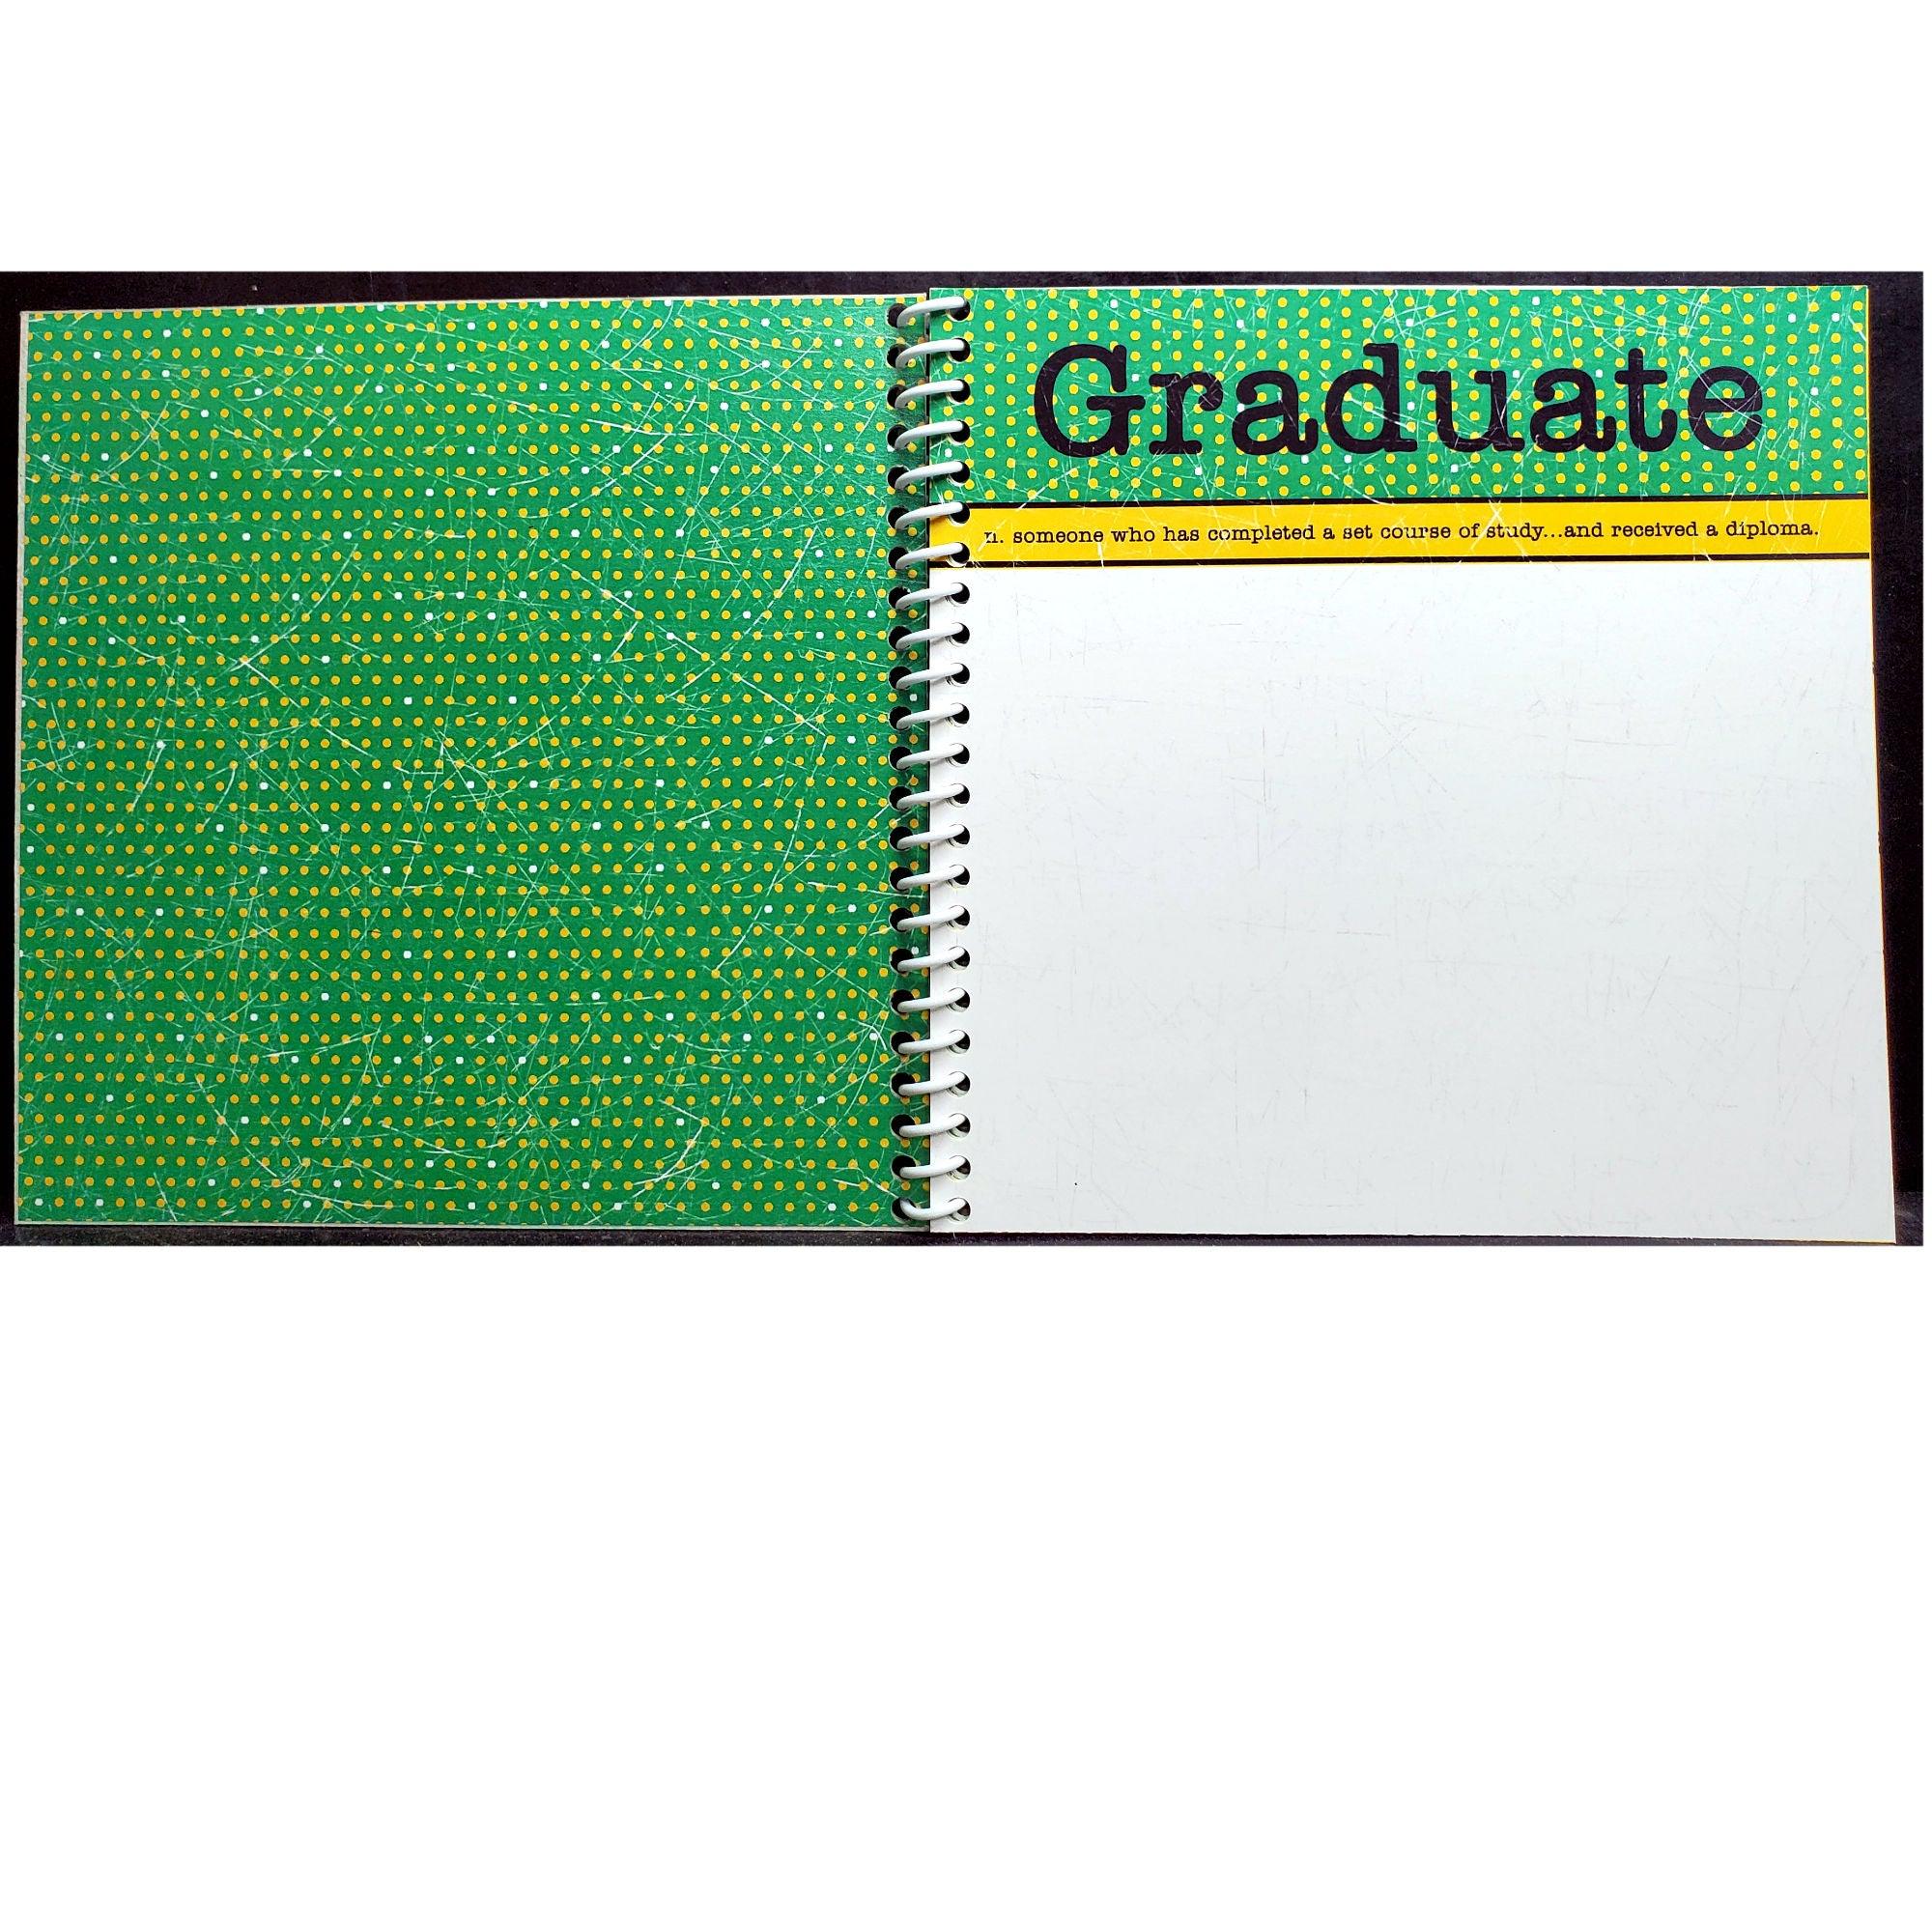 Crystal Lake South High School Gators, Crystal Lake, IL Graduation Mini Album Kit includes album, sticker, and cardstock by Scrapbook Customs - Scrapbook Supply Companies